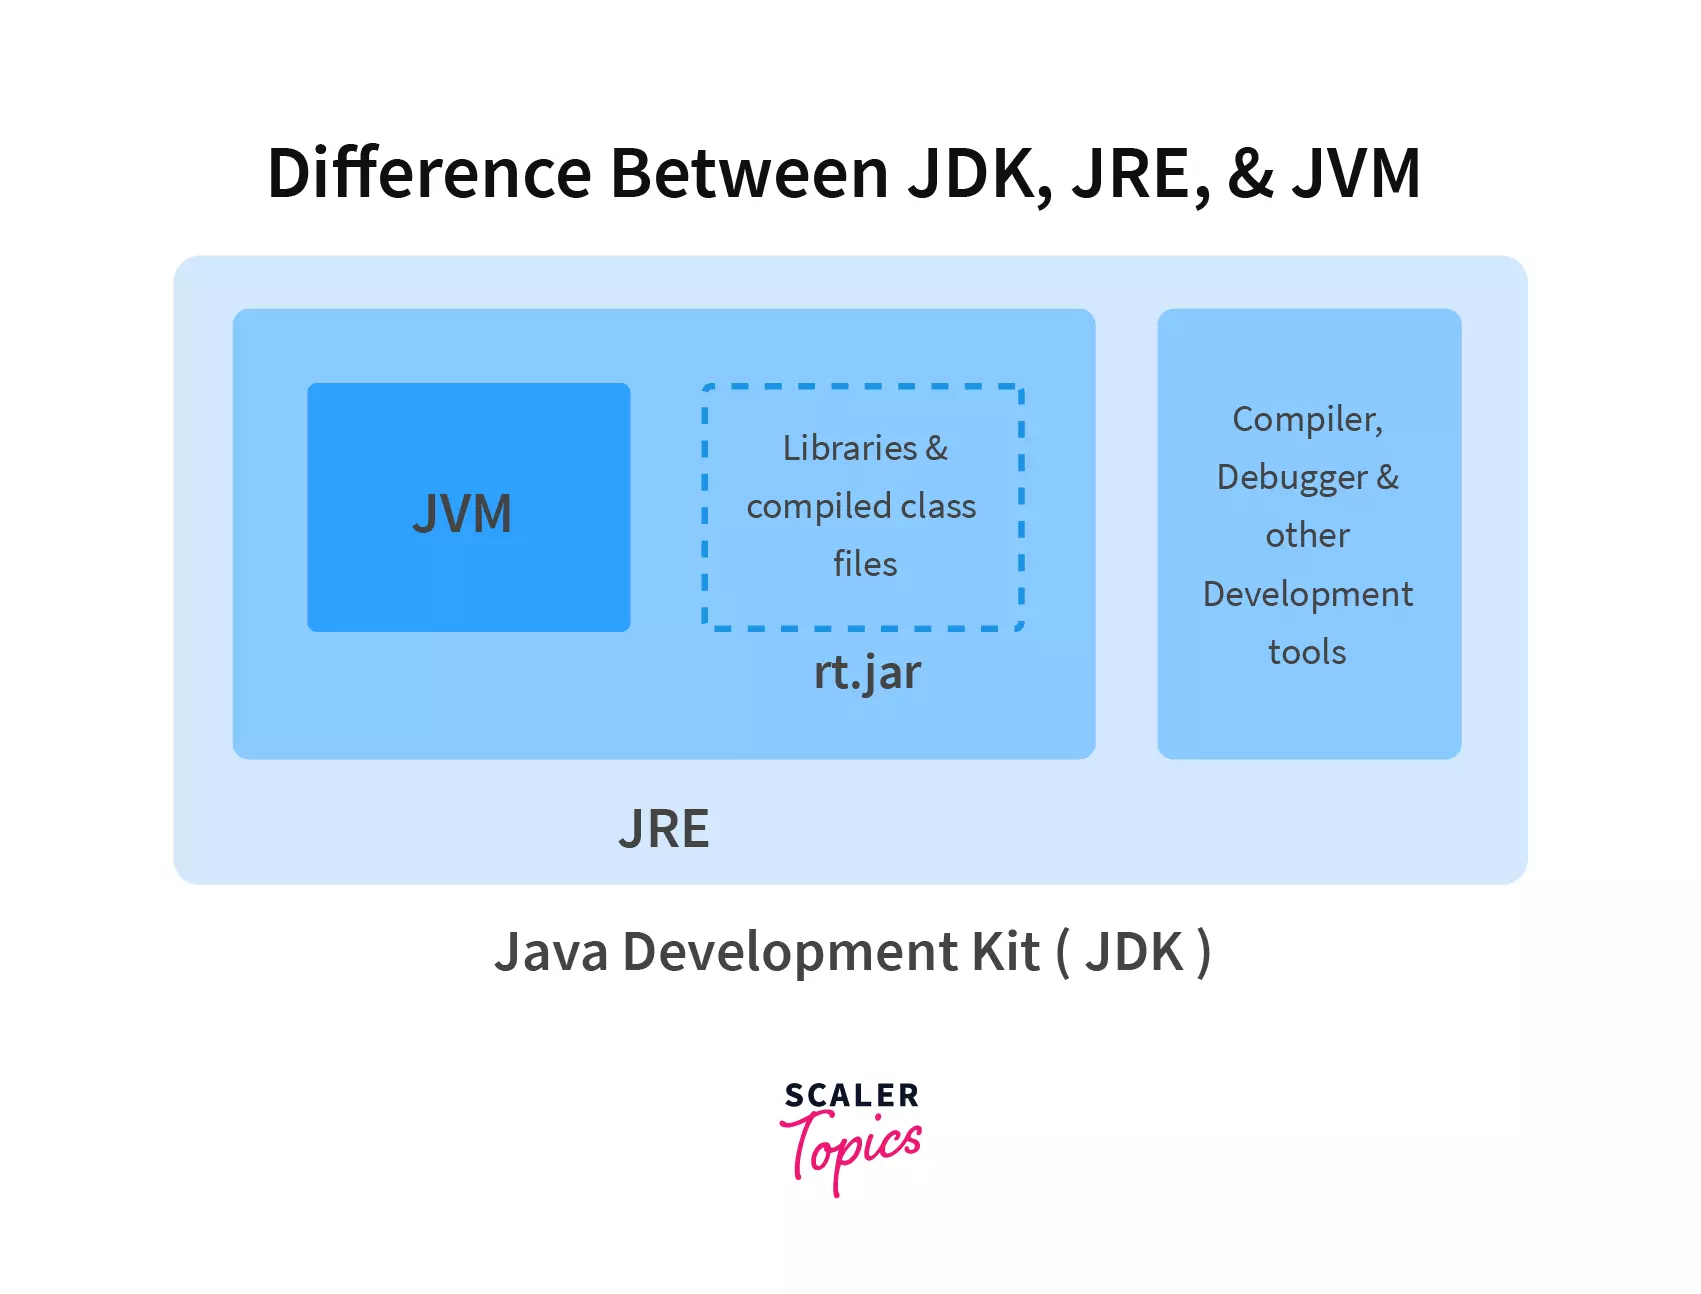 Difference between JDK, JRE, & JVM